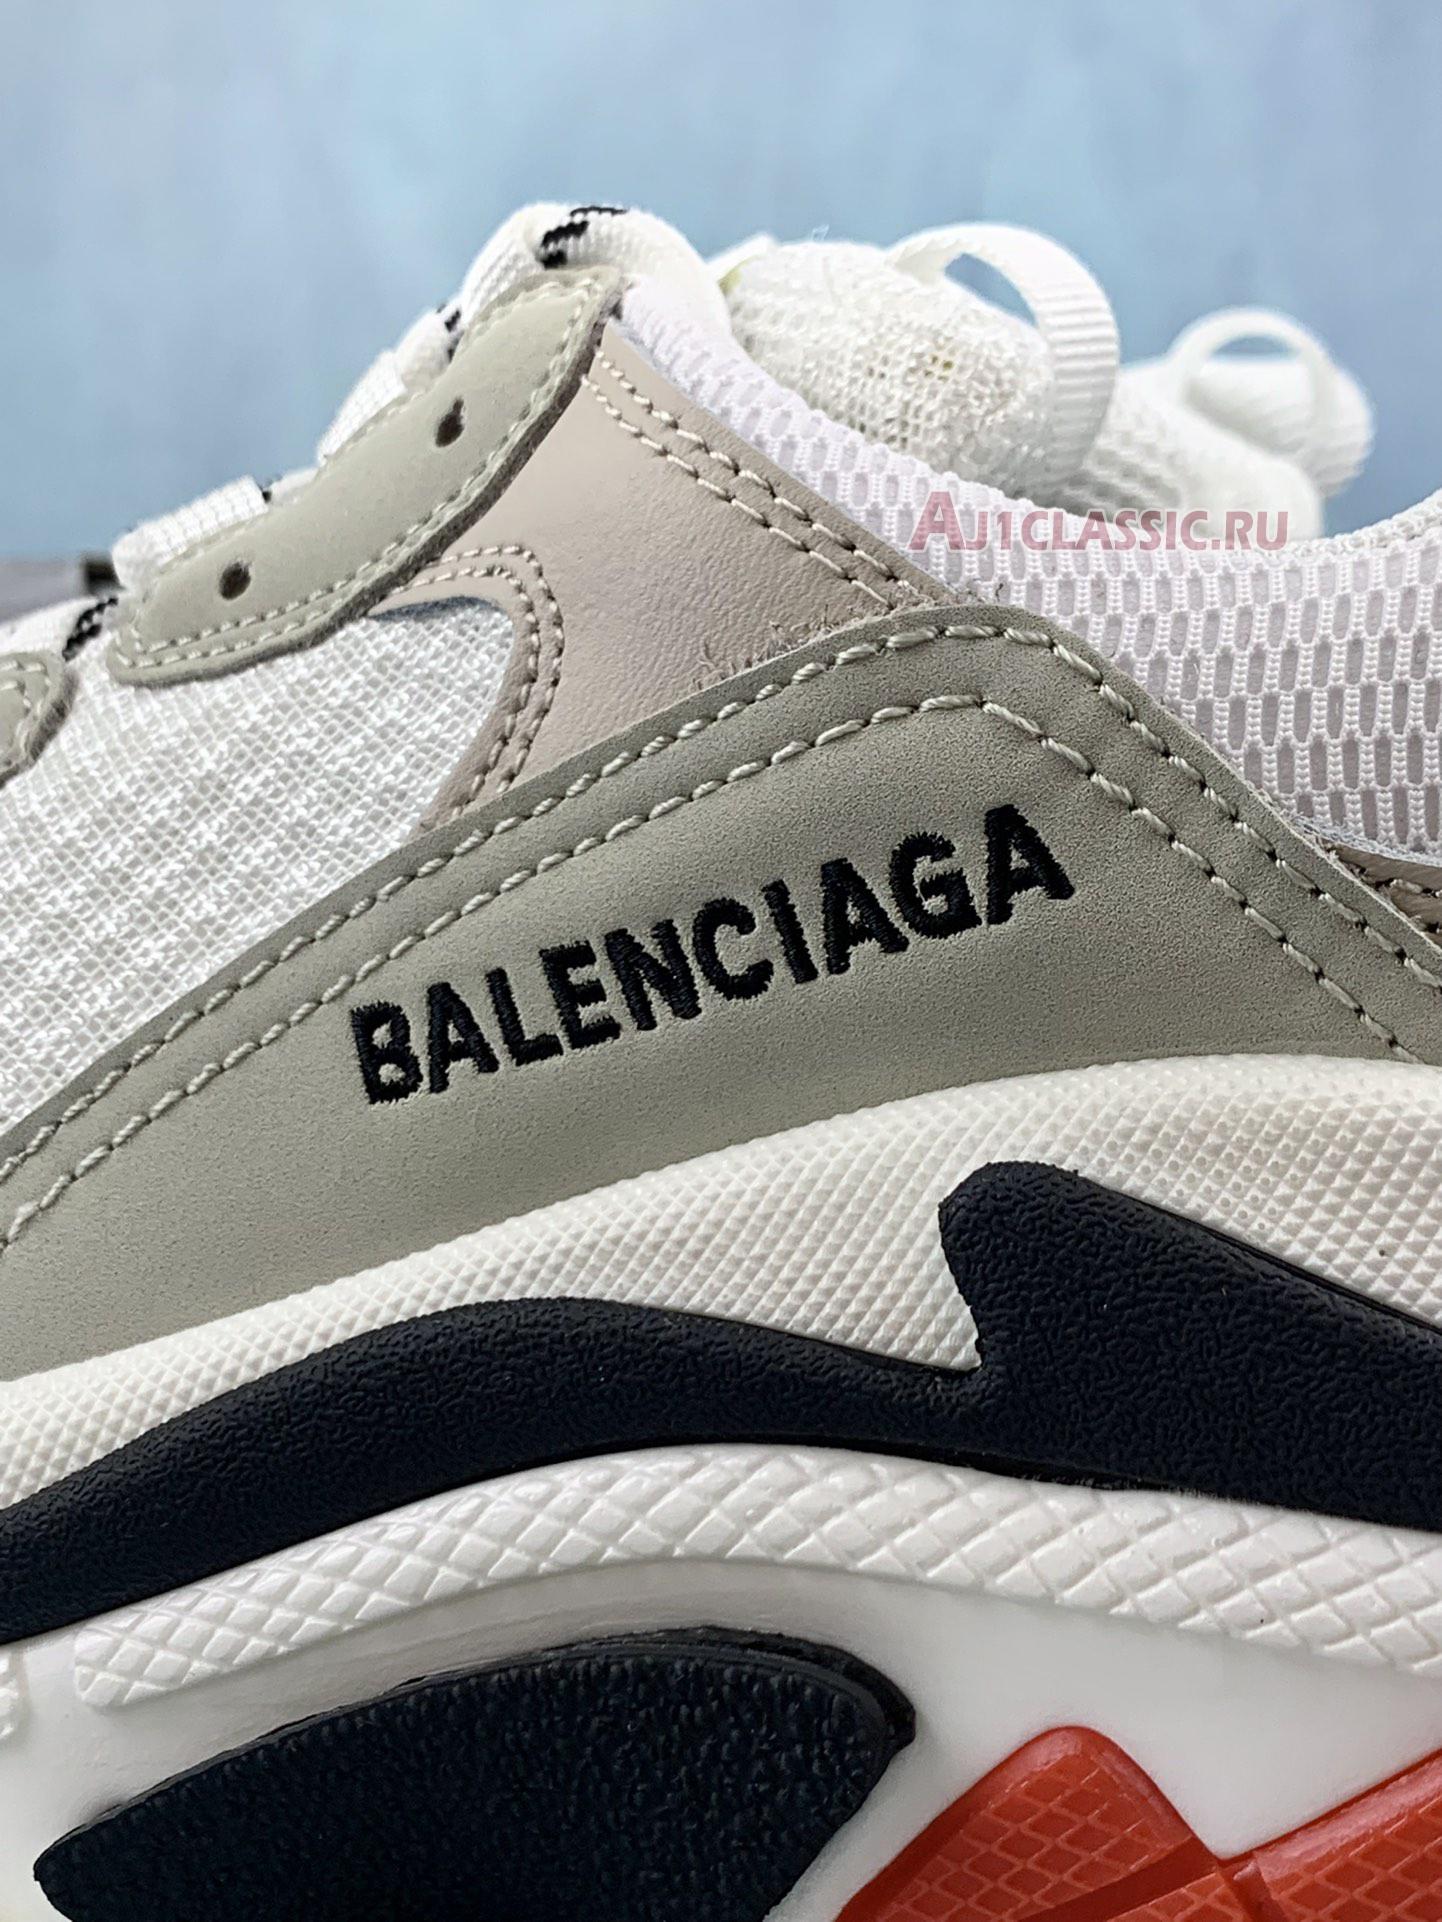 Balenciaga Triple S Sneaker "White Black Red" 533882 W09E1 9000